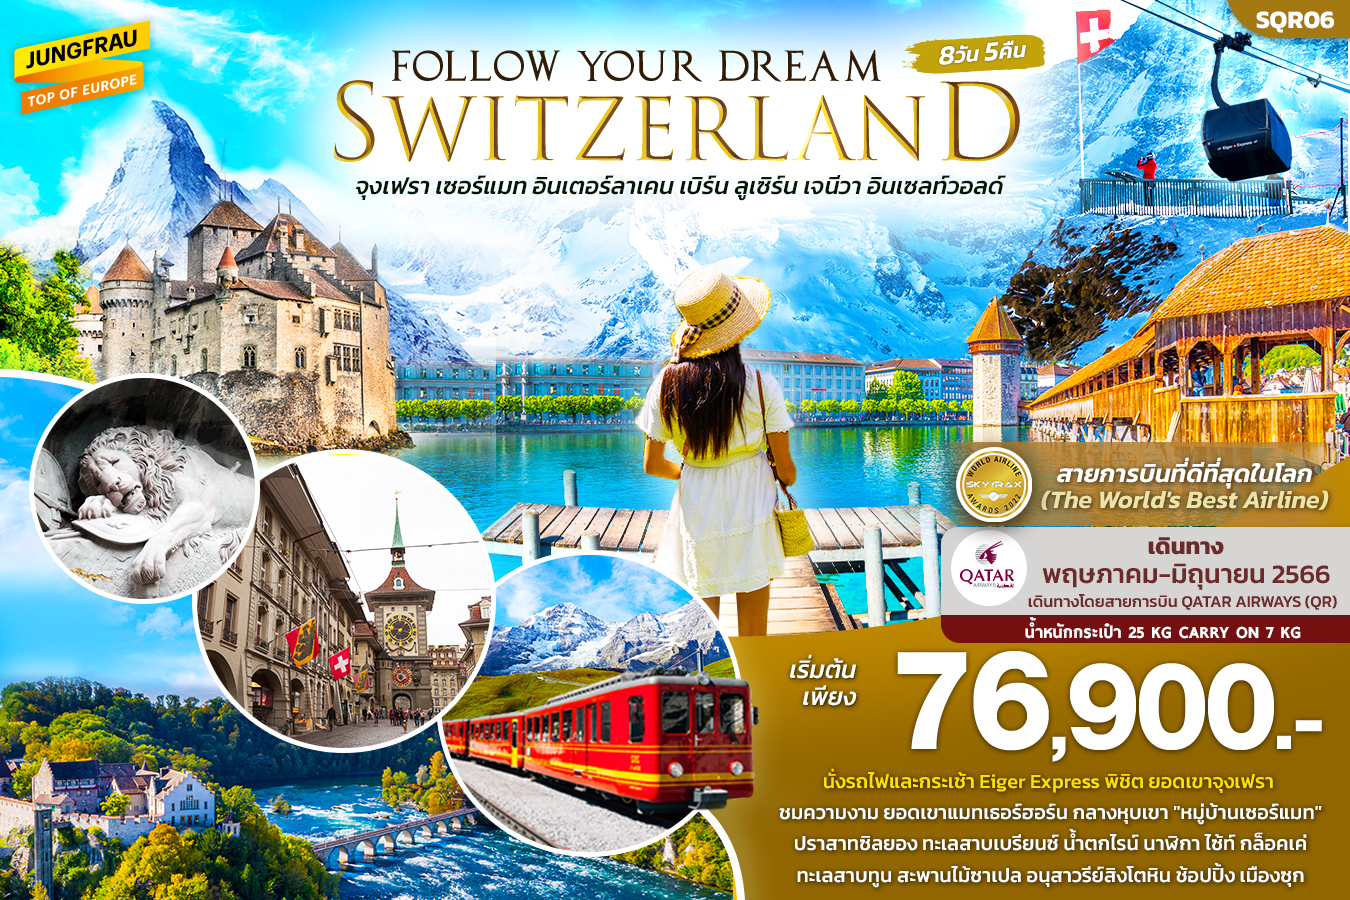 FOLLOW YOUR DREAM SWITZERLAND